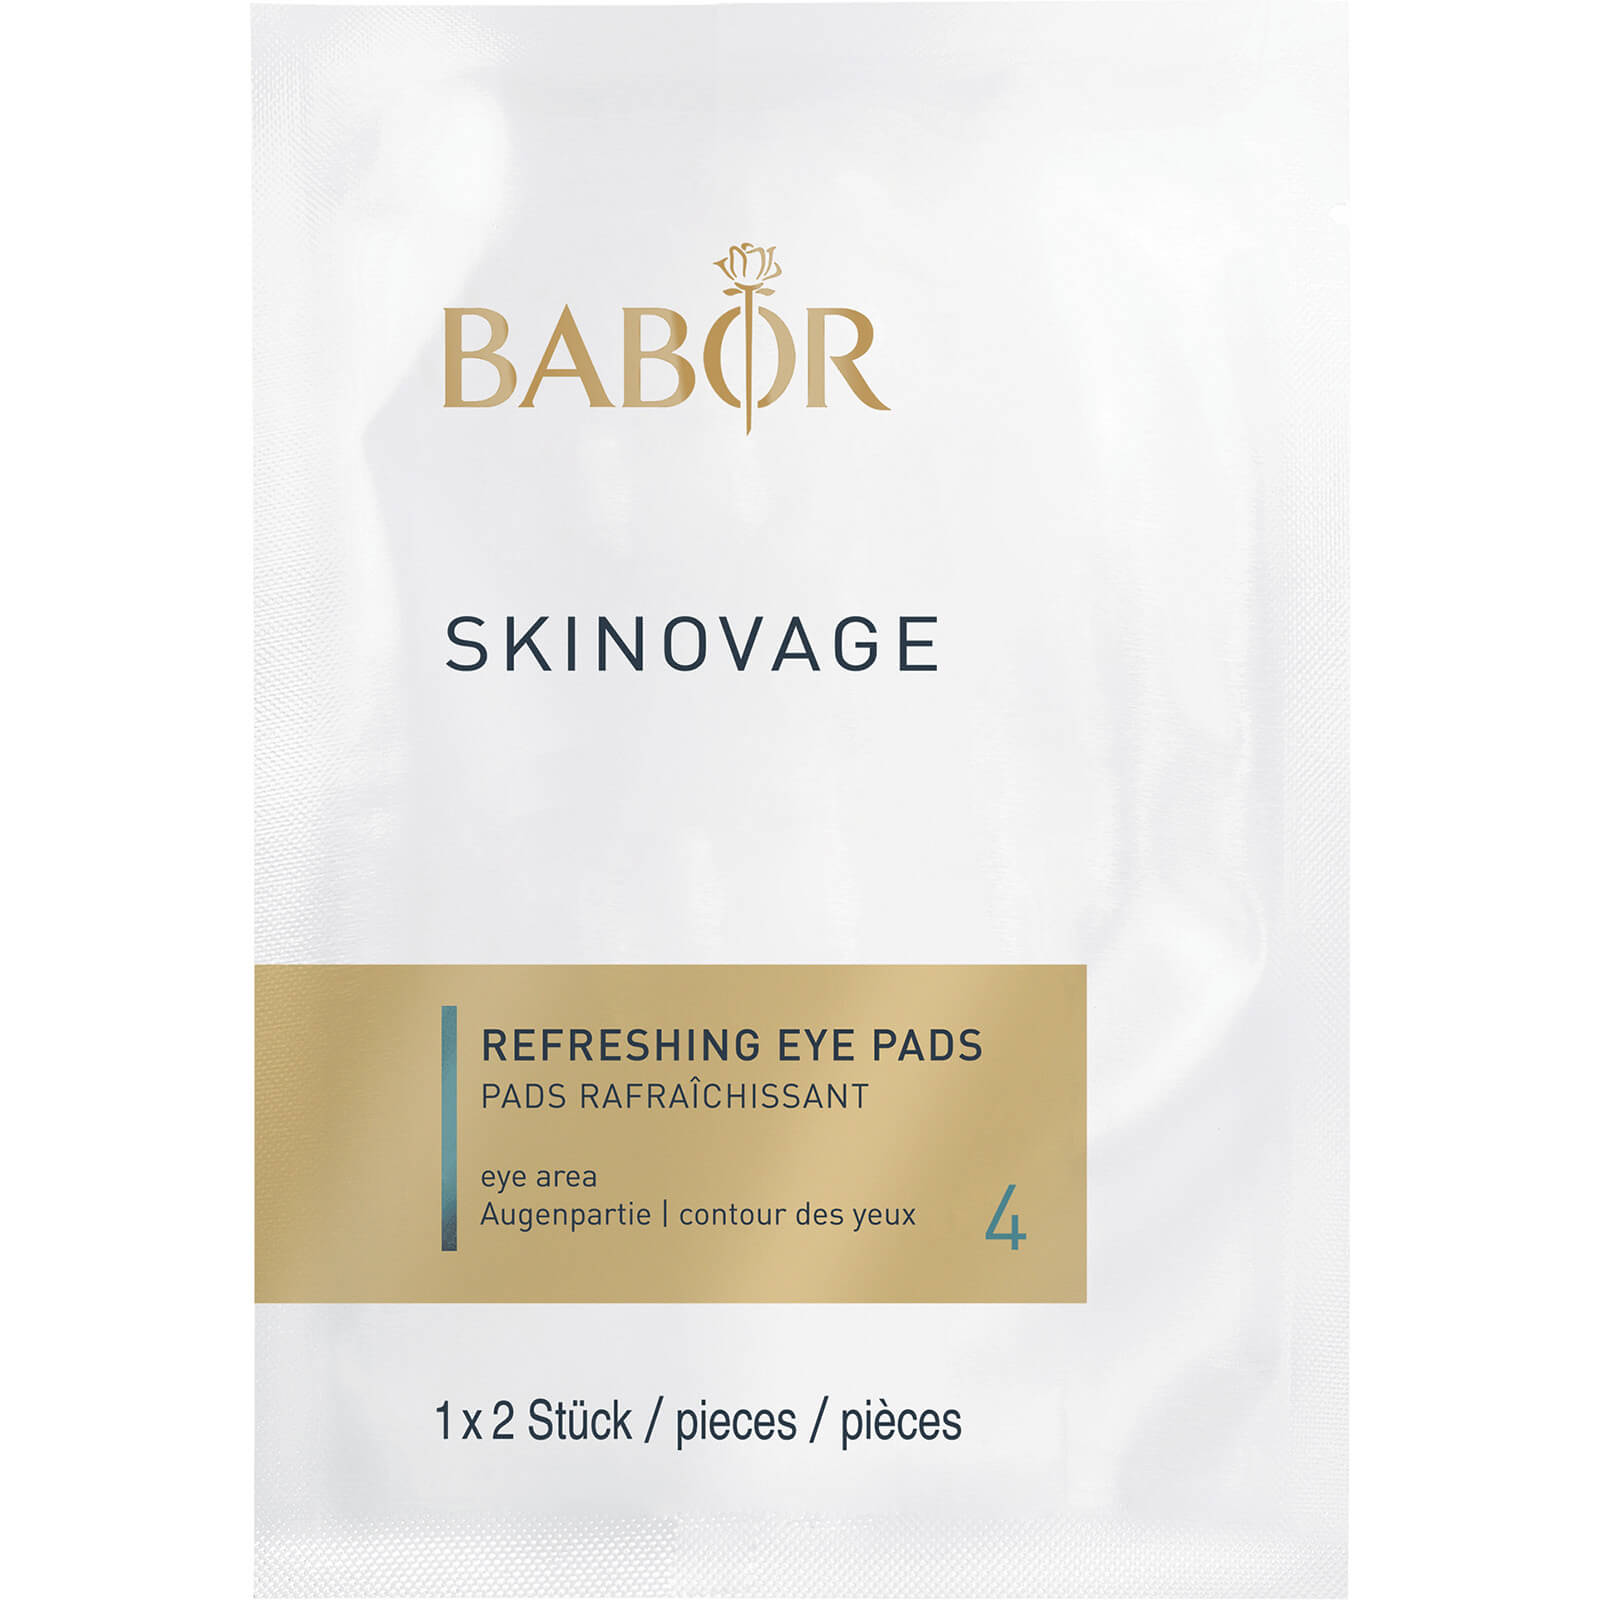 BABOR SKINOVAGE Refreshing Eye Pads (5 Pack)